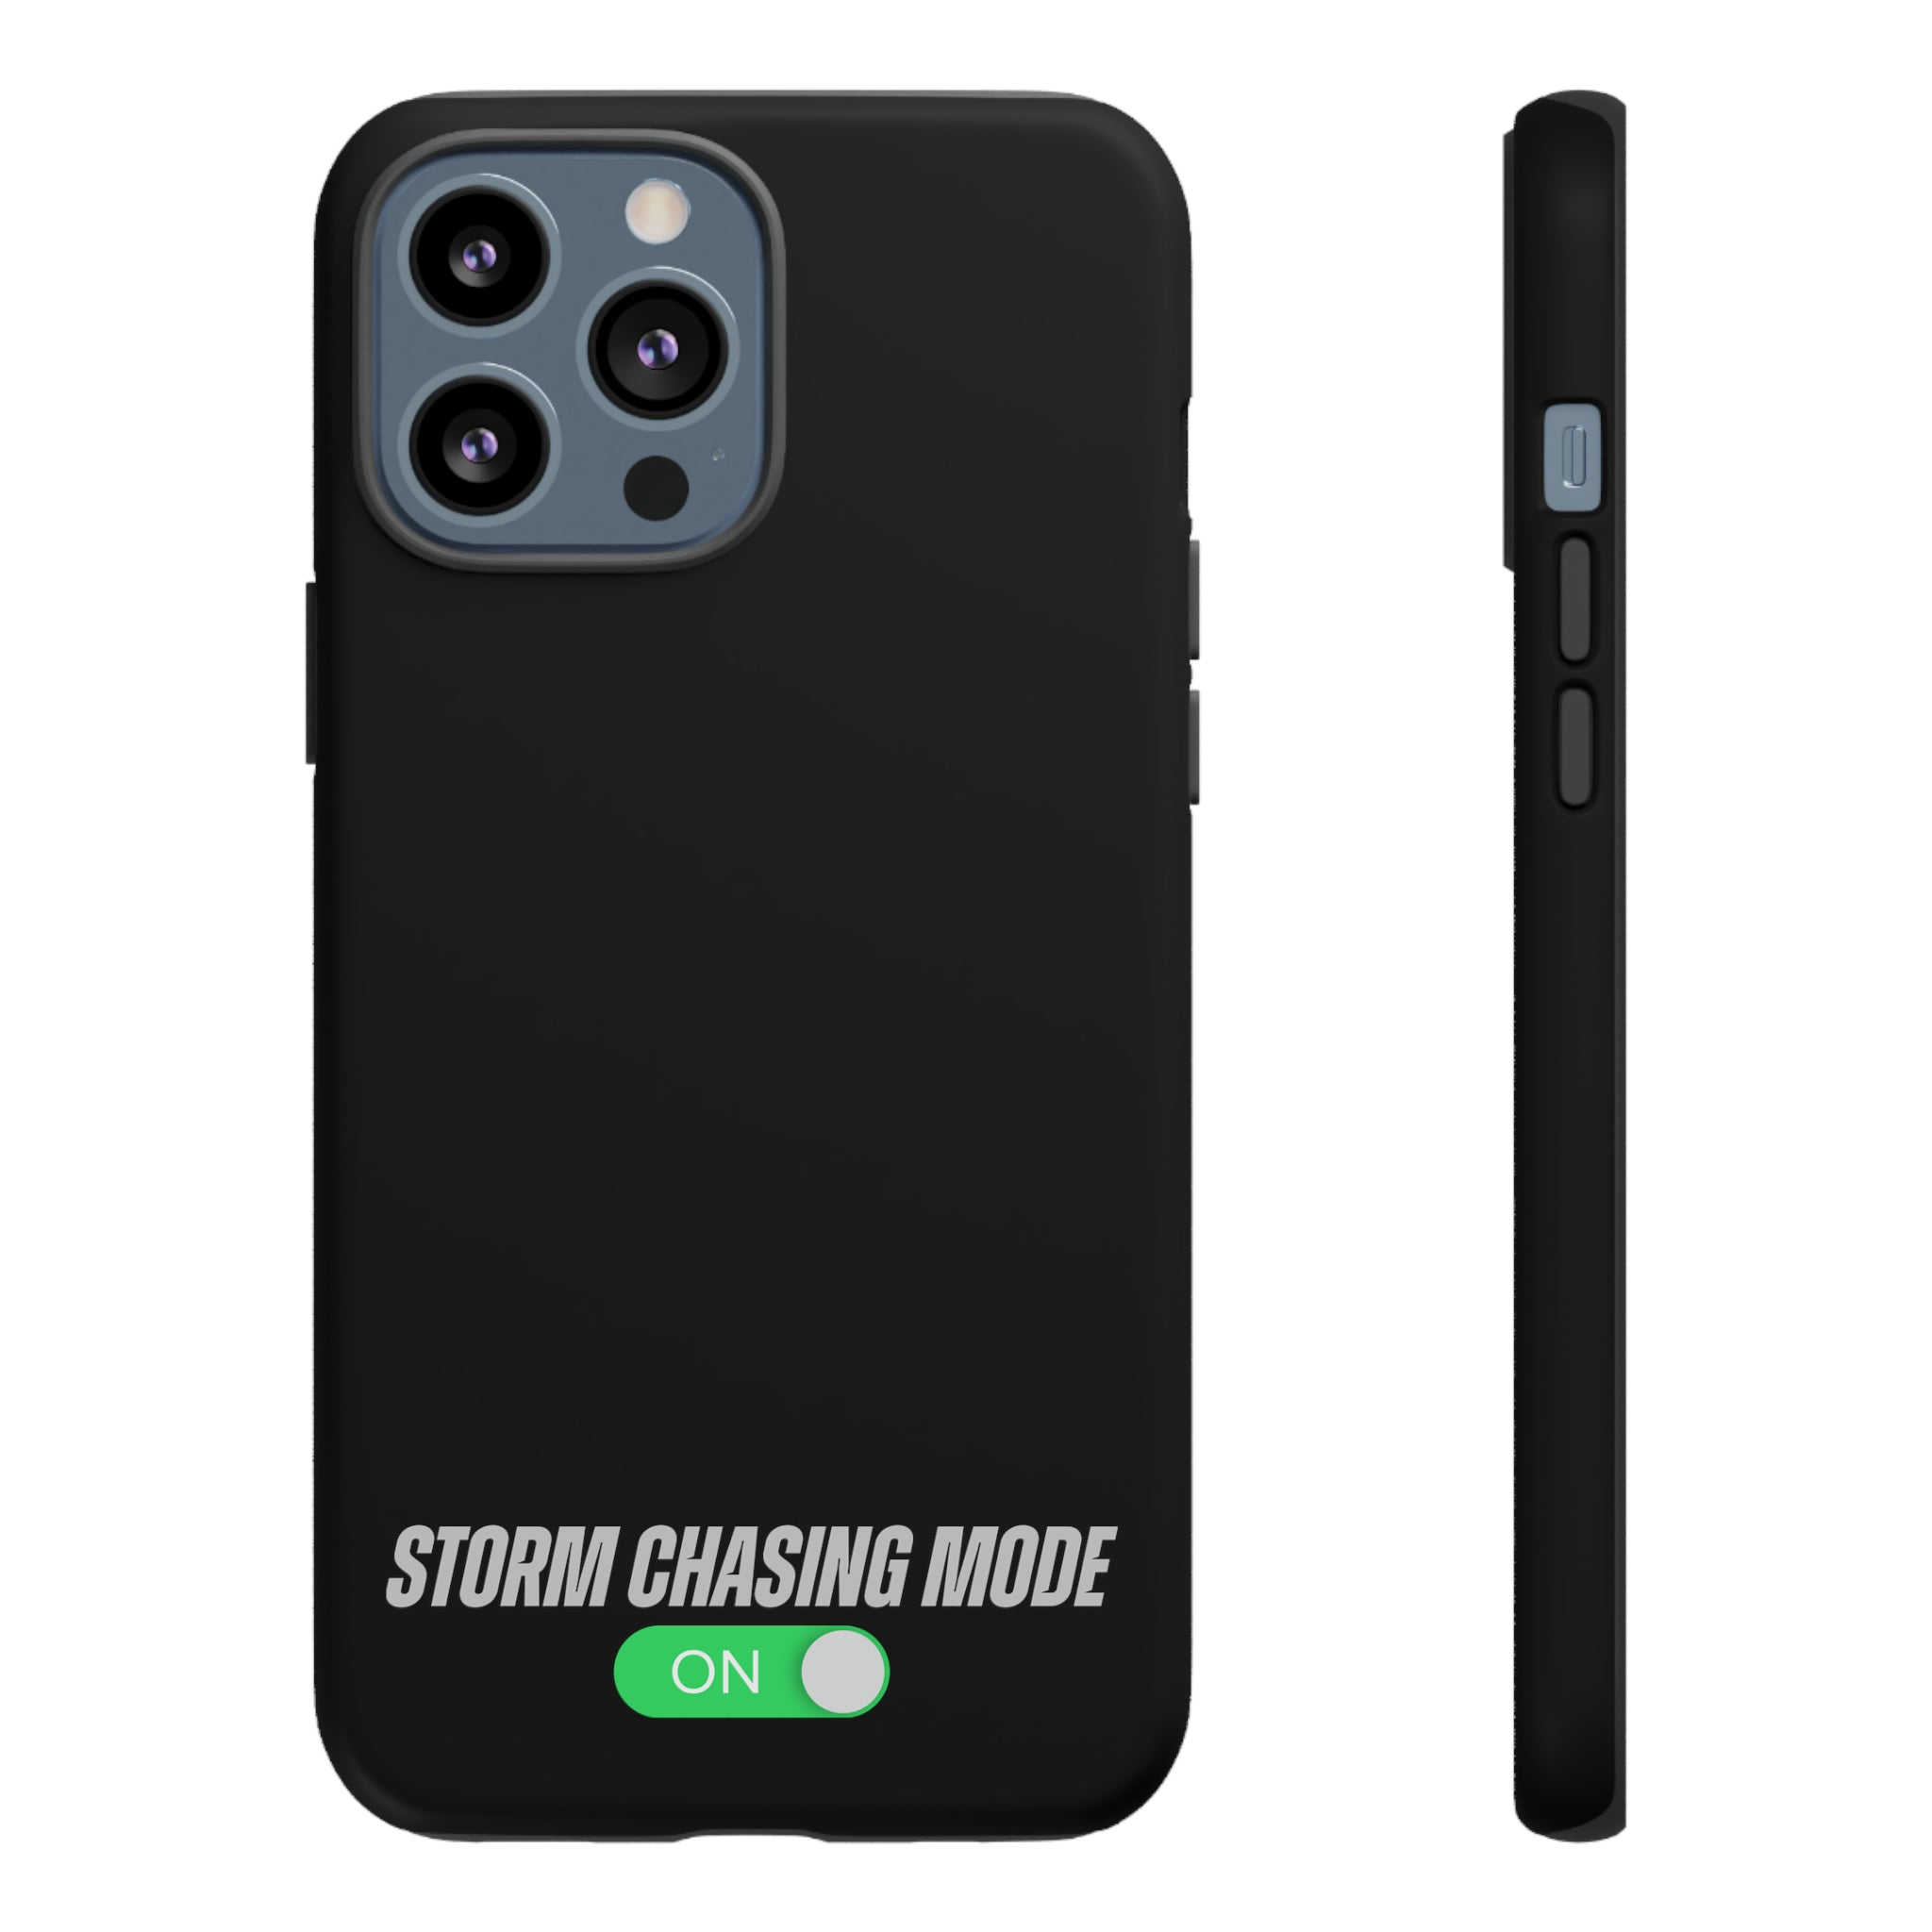 Modo Storm Chasing: ON Estuche resistente para teléfono 